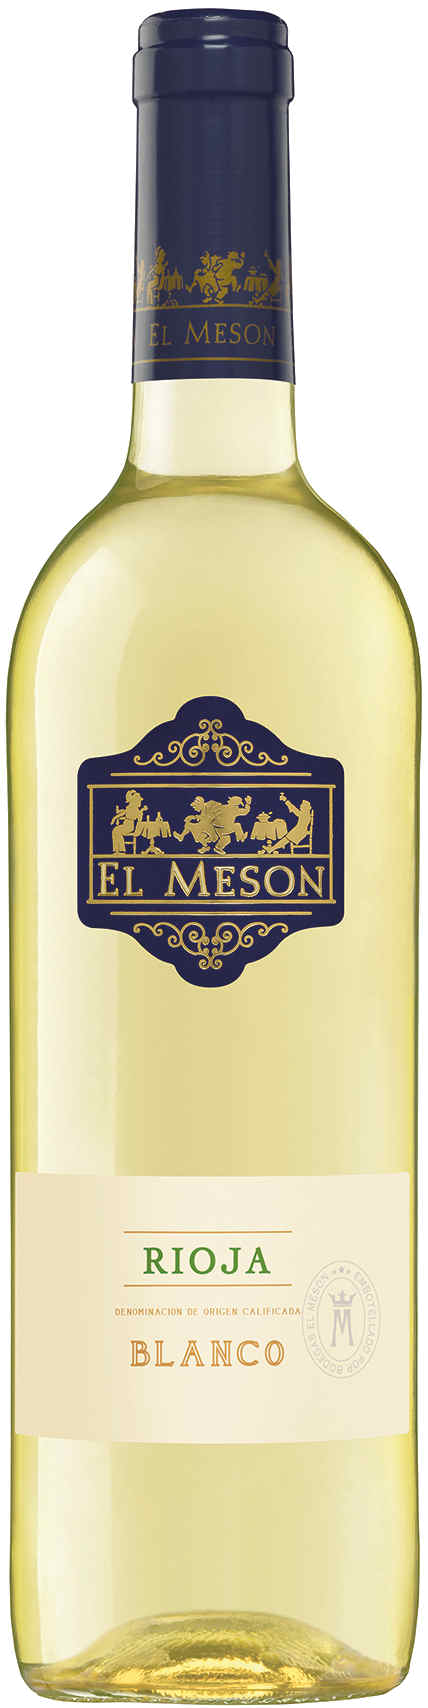 El Meson Rioja Blanco DOCa